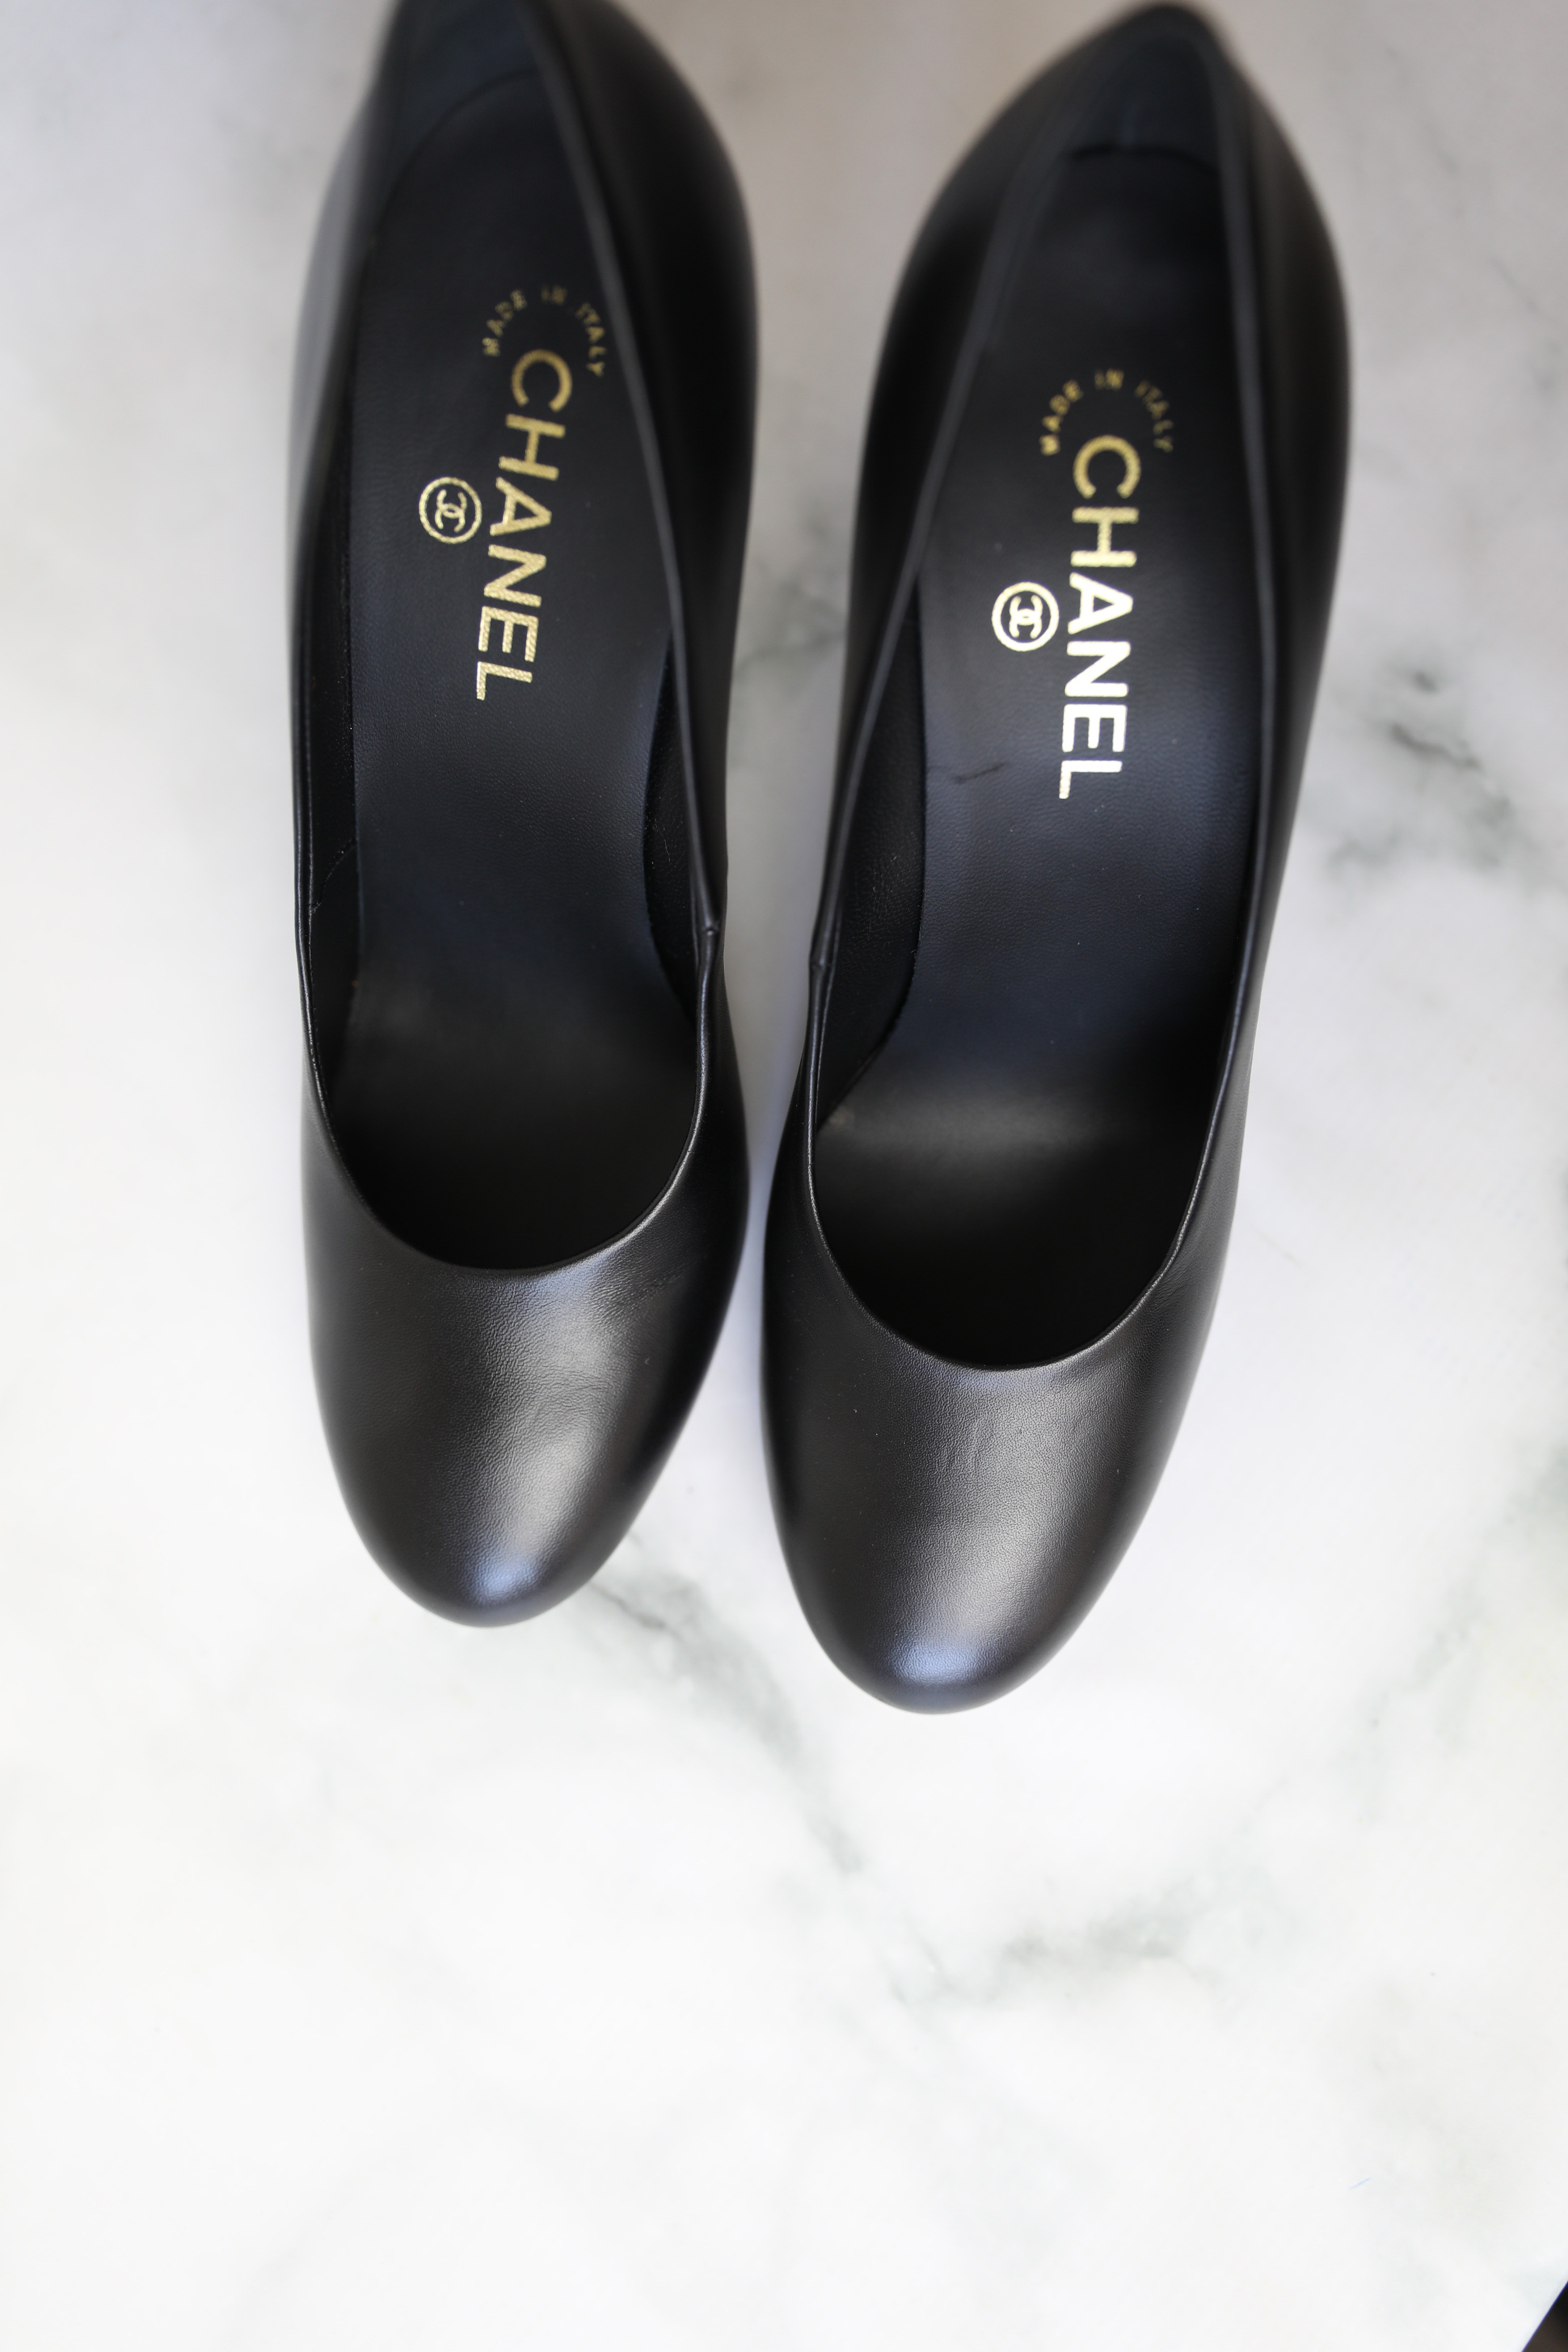 Chanel Shoes Slingback Flats, Beige and Black, Size 37.5, New in Box WA001  - Julia Rose Boston